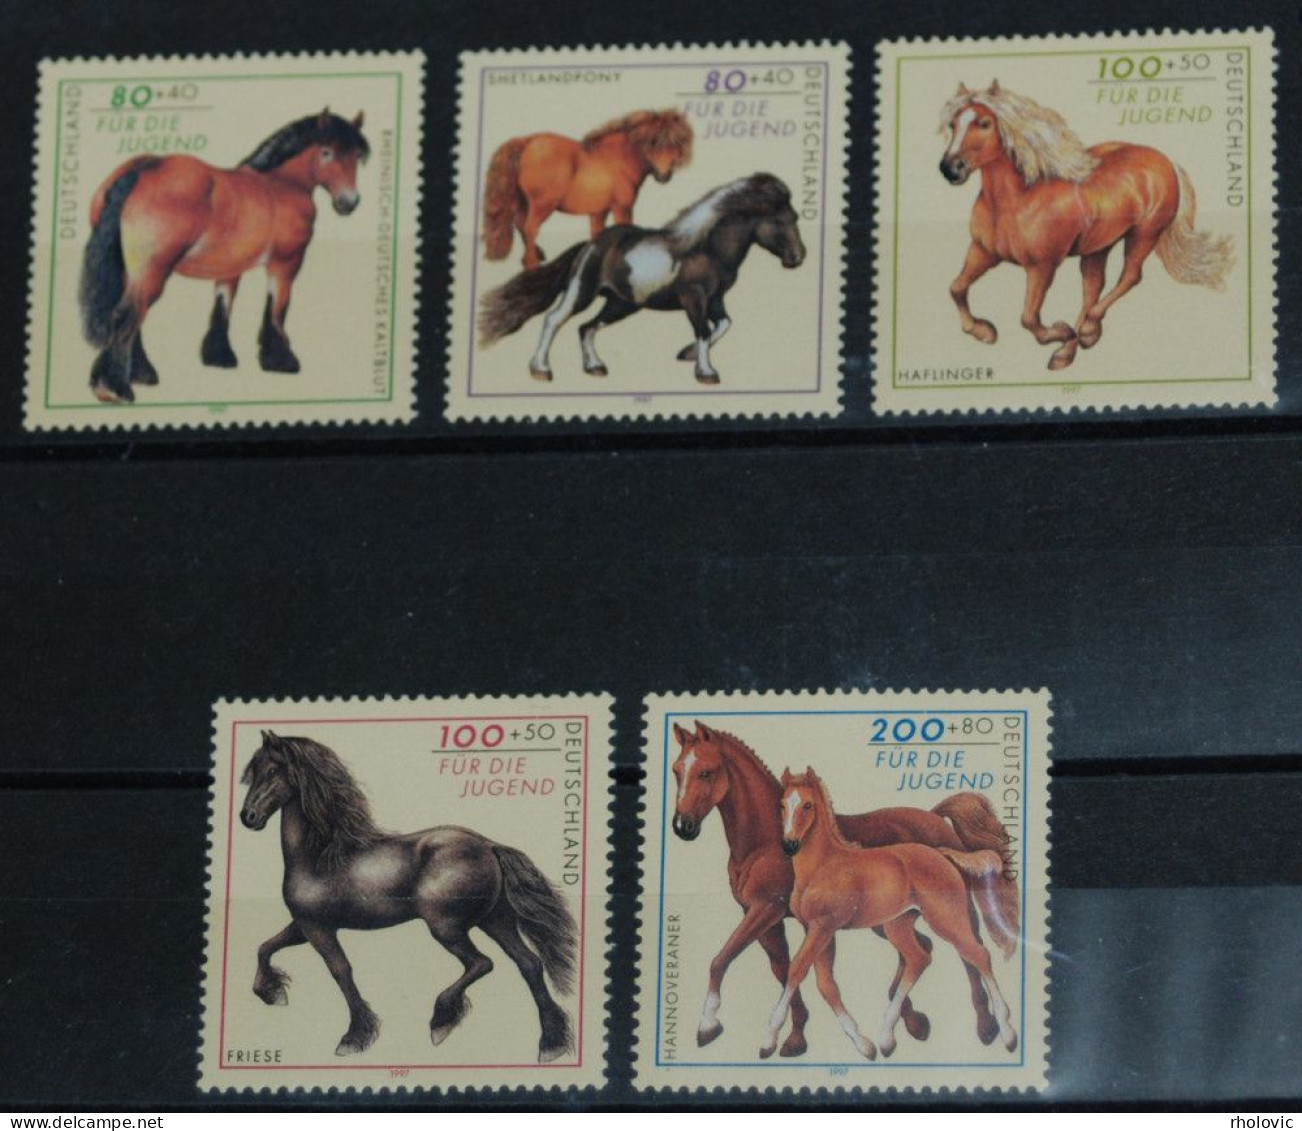 GERMANY 1997, Horses, Animals, Fauna, Mi #1920-4, MNH**, CV: €11 - Pferde